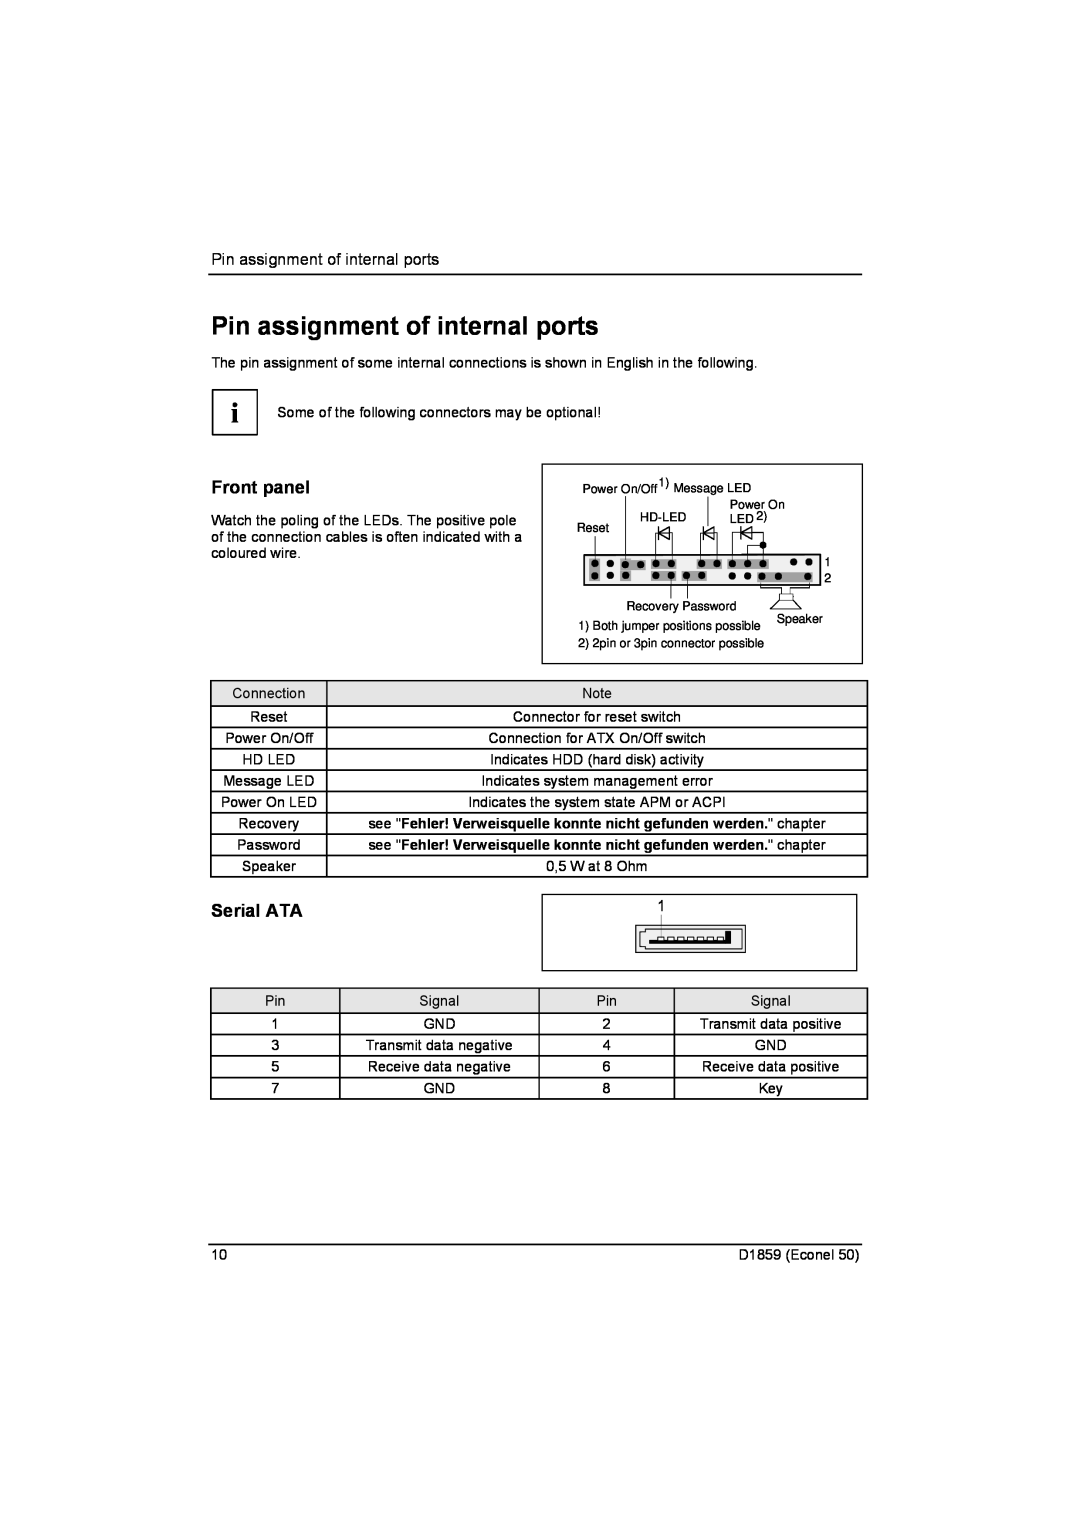 Fujitsu D1859 technical manual Pin assignment of internal ports, Front panel, Serial ATA 